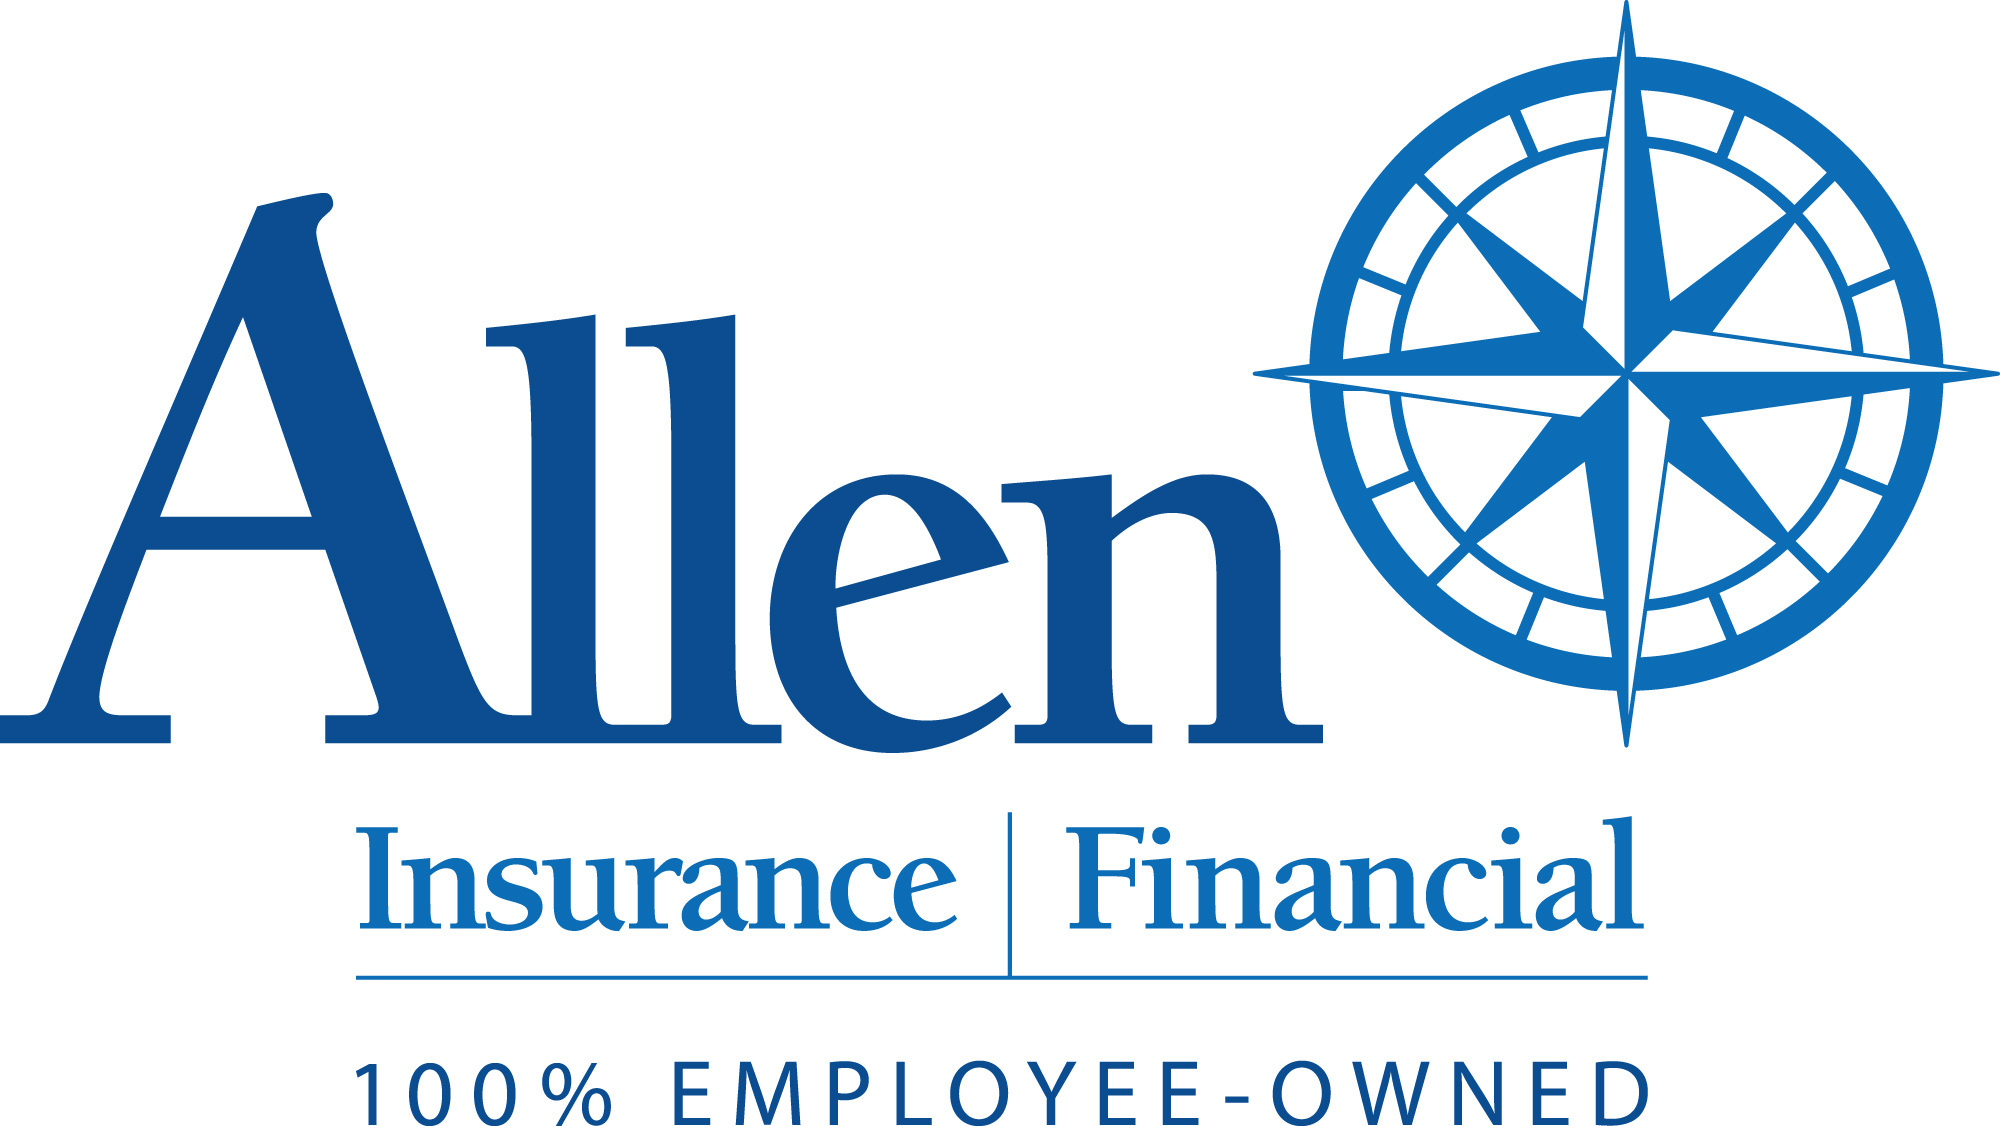 Allen Insurance and Financial